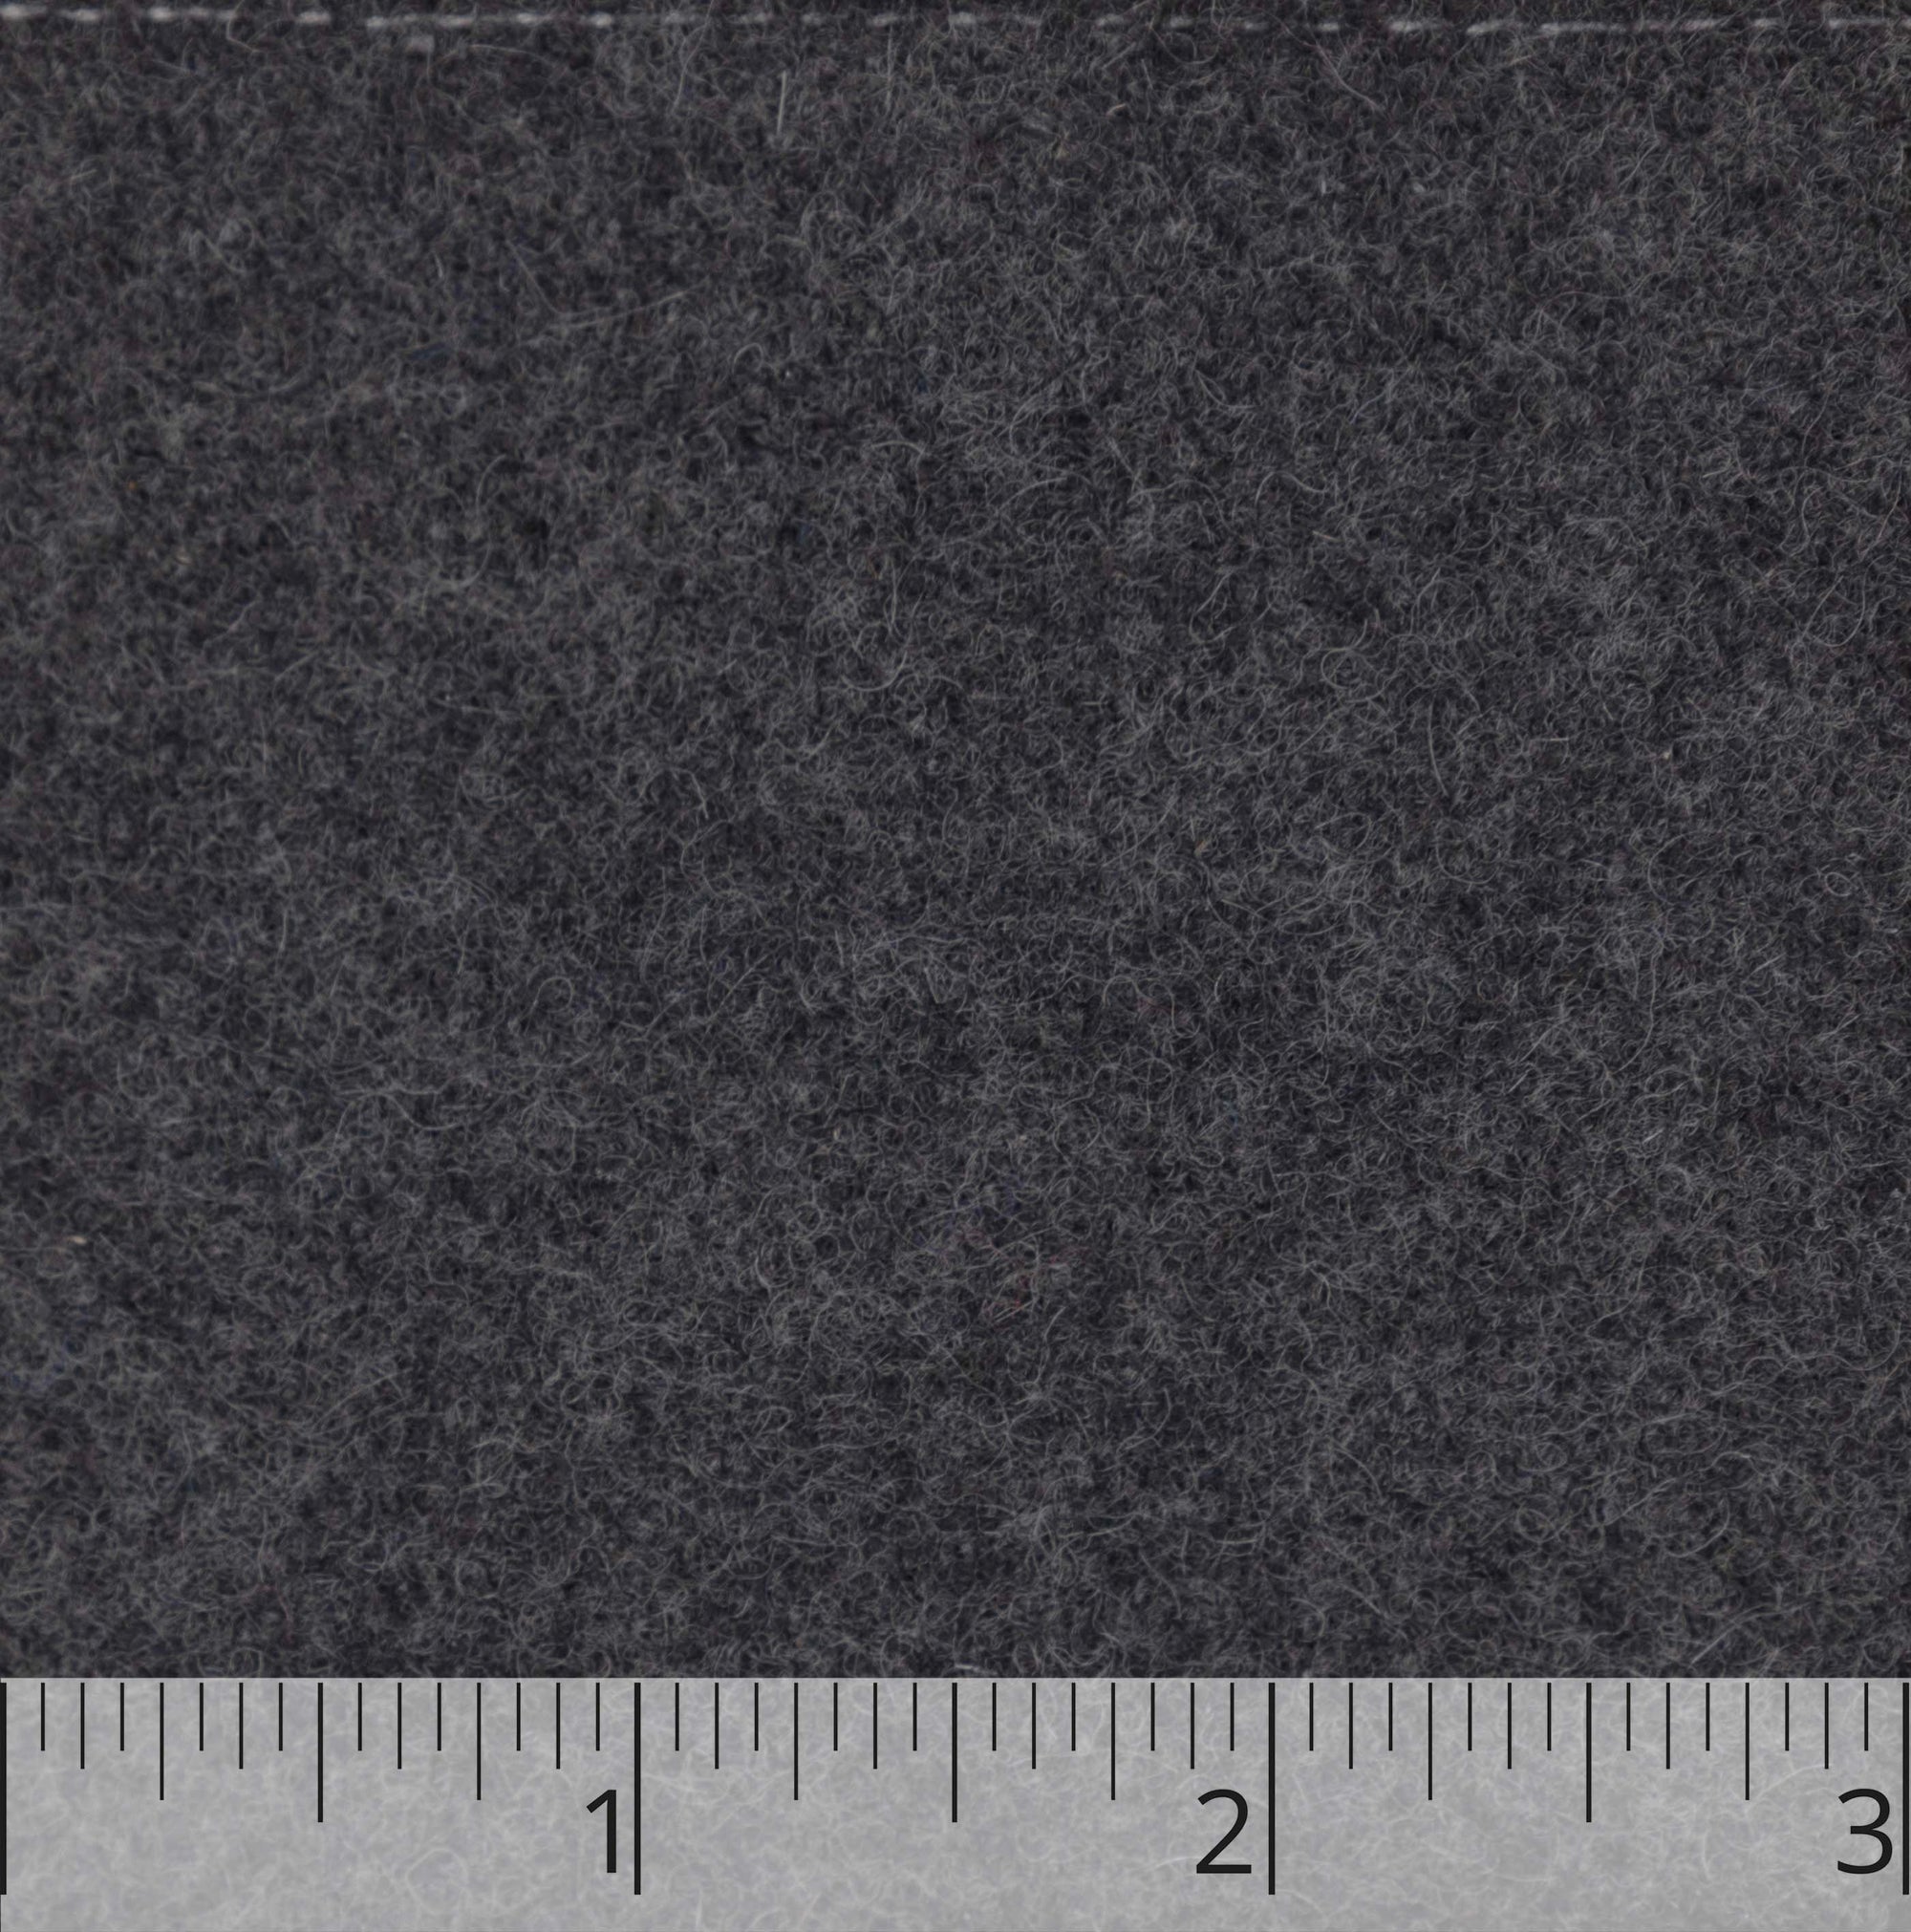 Mixed Dark Grey Fine Broadcloth - $23.00 yd. - Burnley & Trowbridge Co.